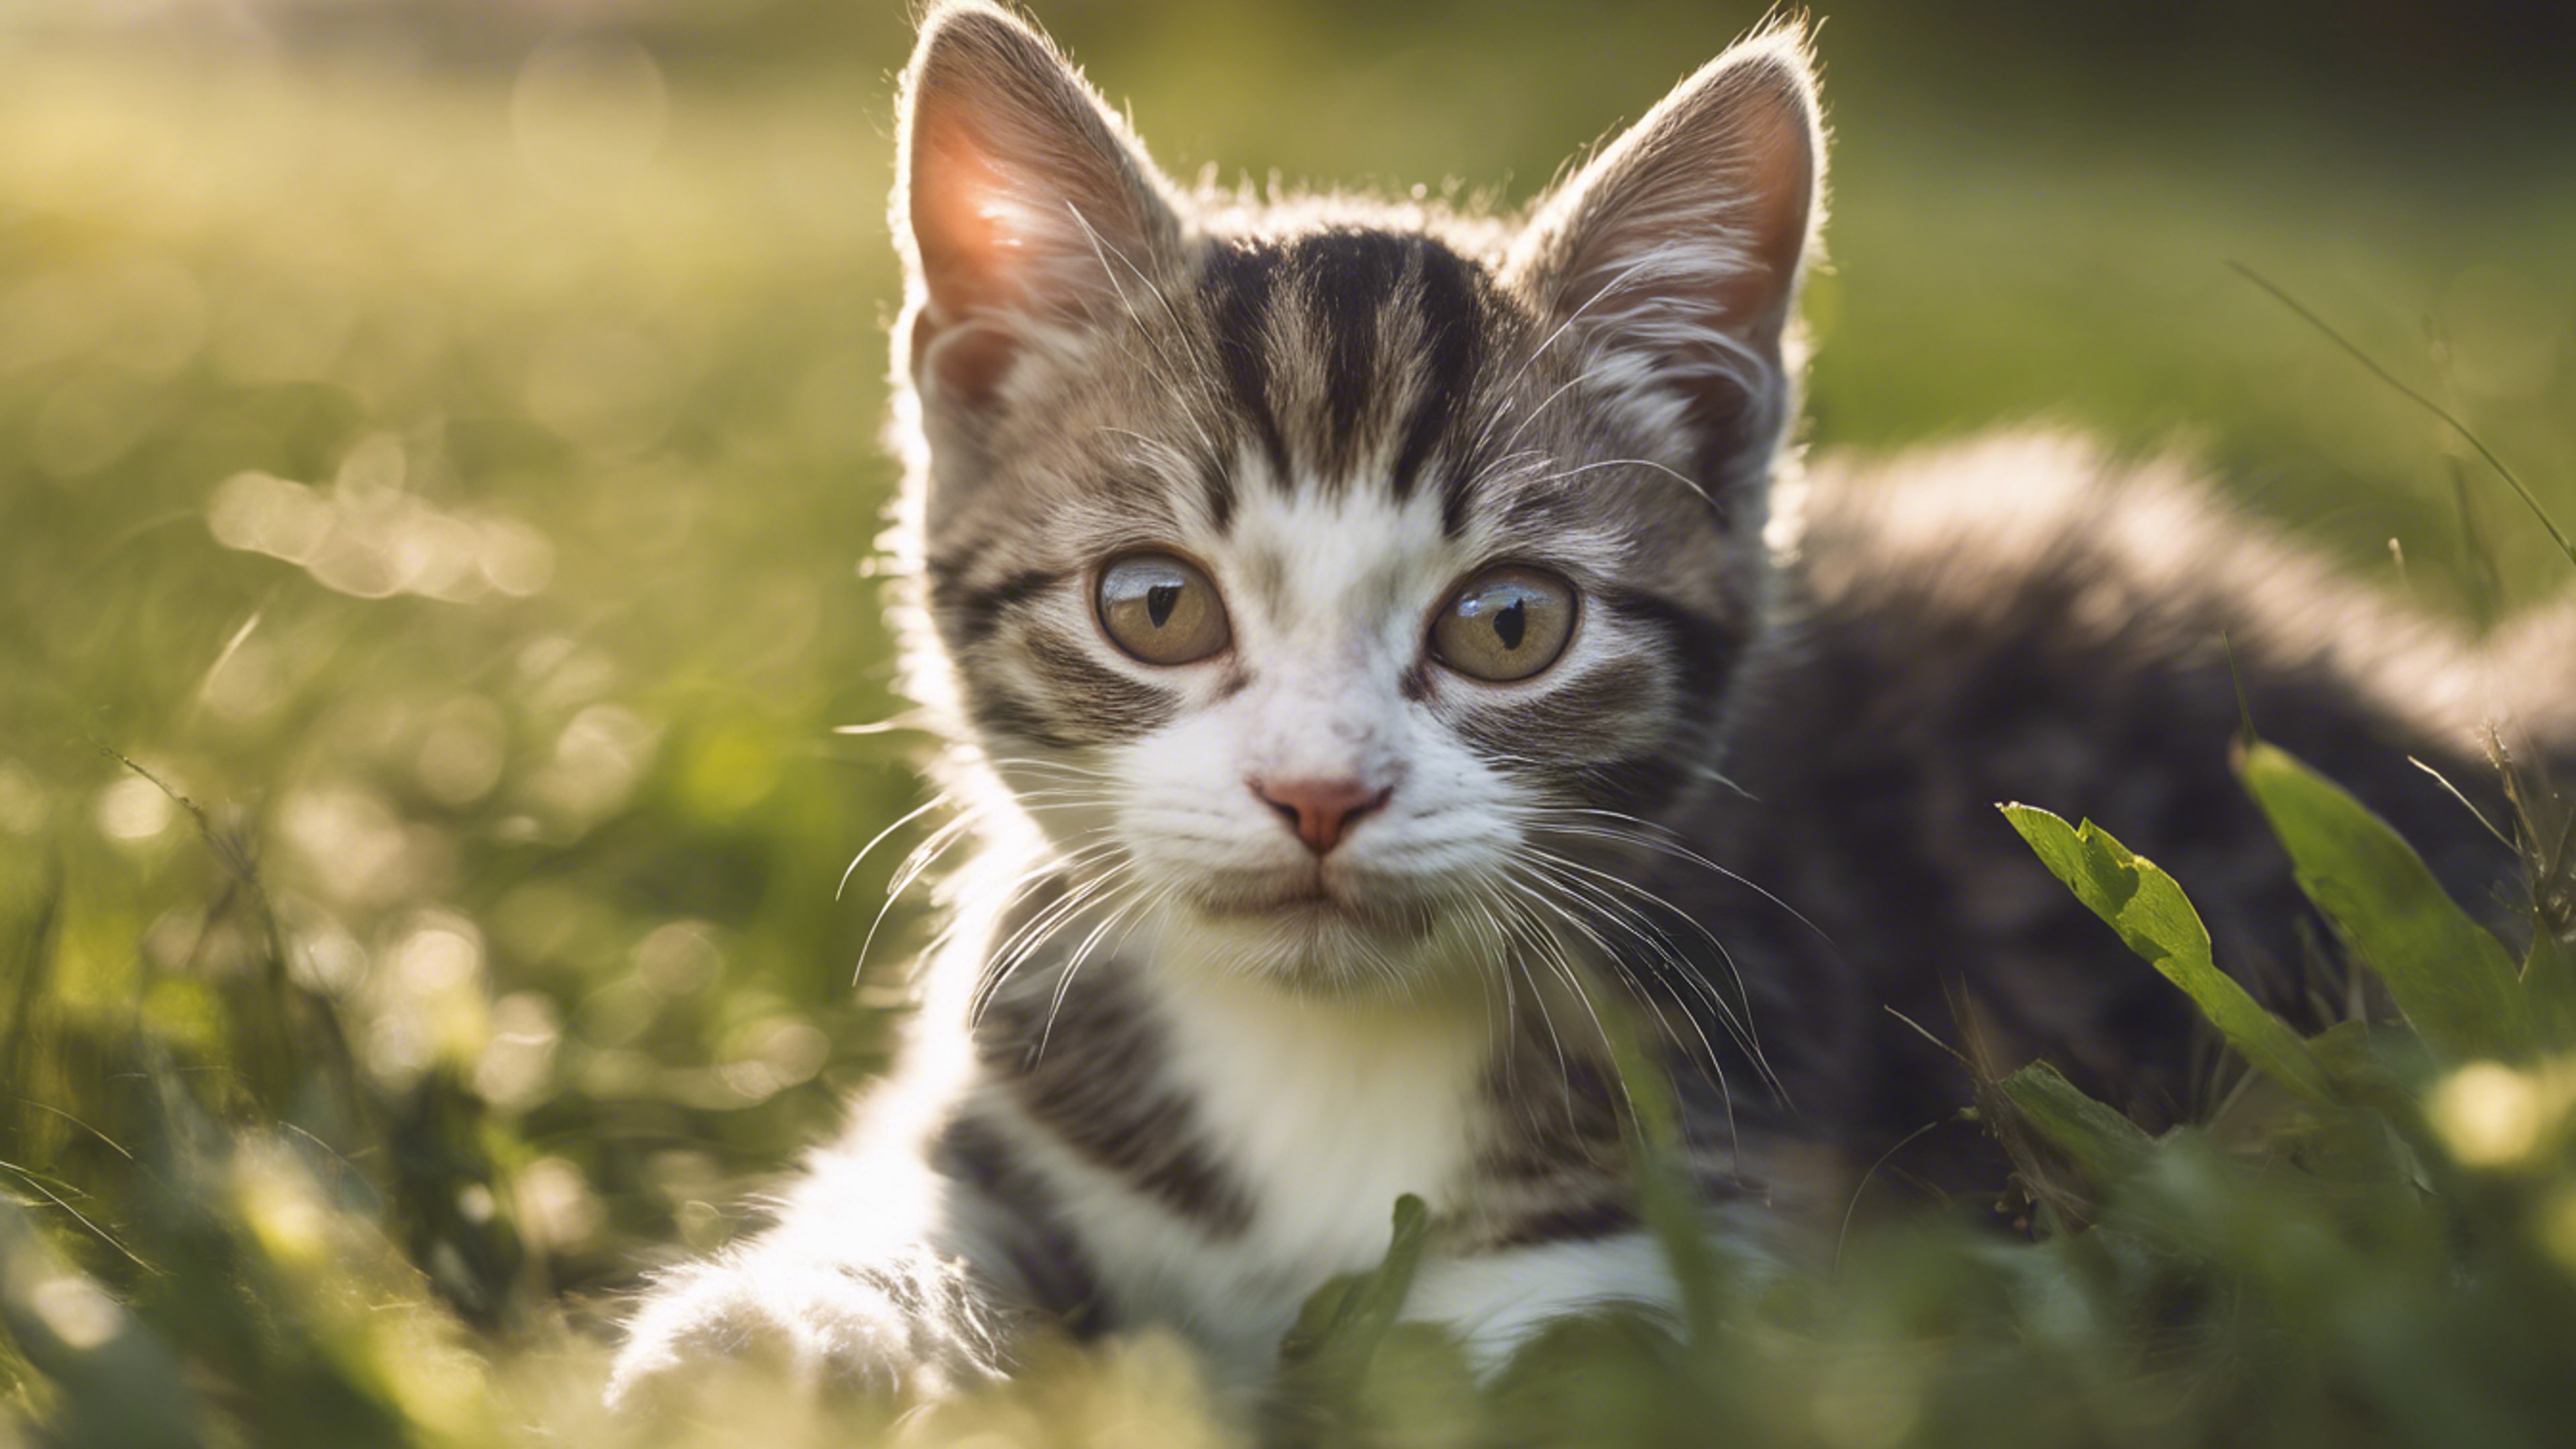 An American Wirehair kitten lazing around on a lush grassland, its wirehair coat glistening in the warm sunlight. Tapeta[18d7904395c0457790d6]